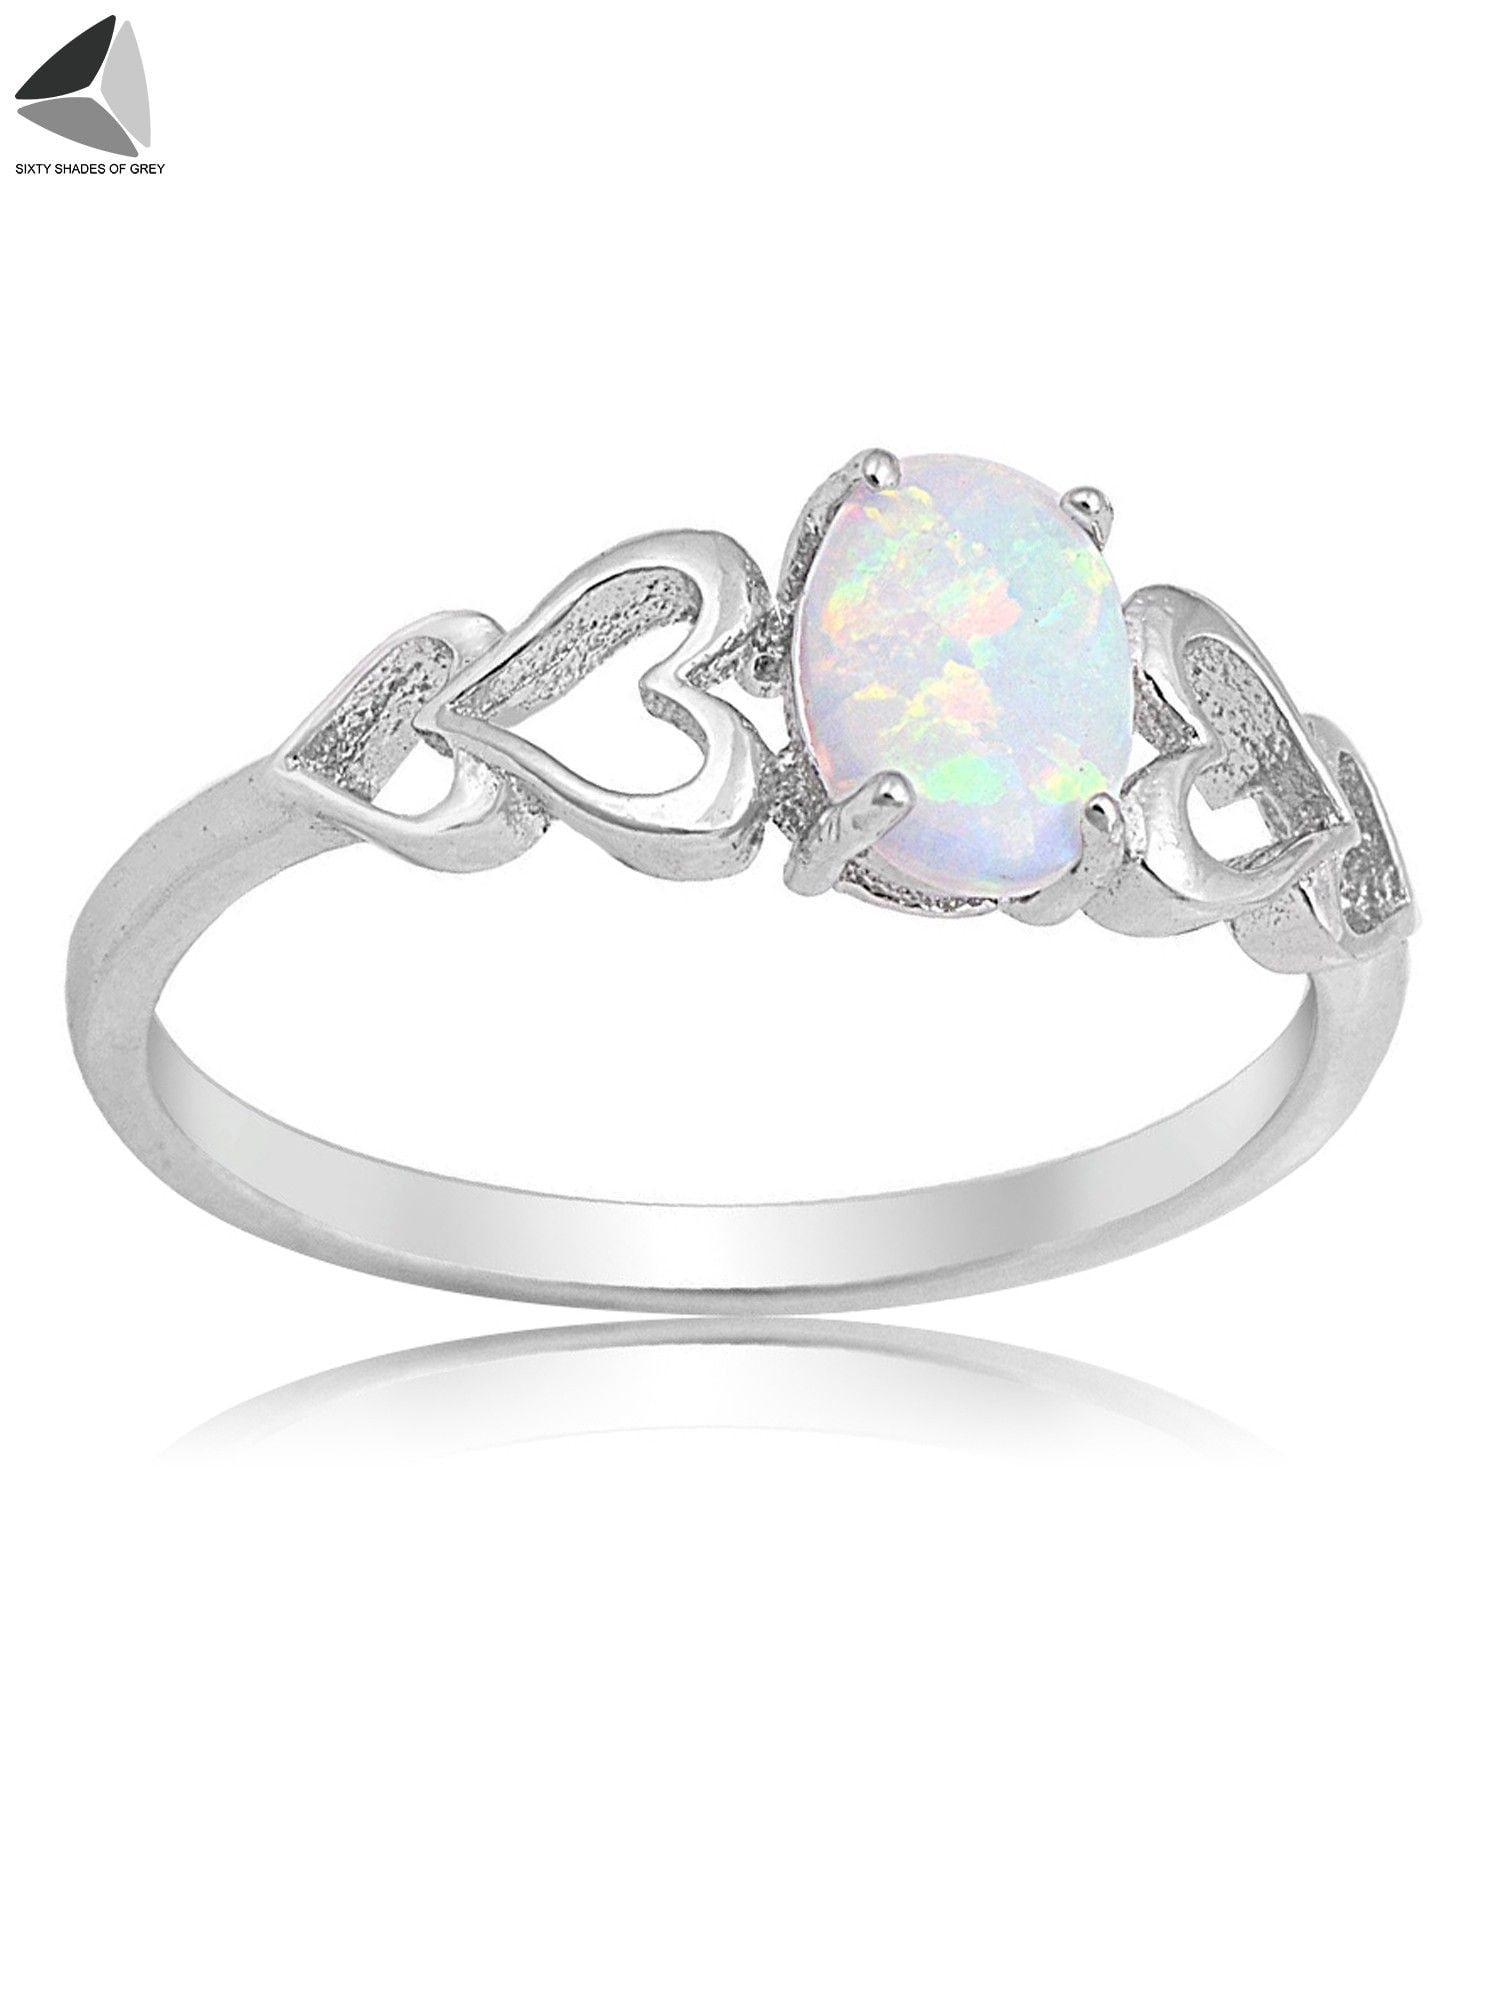 Elegant Wedding Rings for Women 925 Silver Marquise Cut Green Opal Size 6-10 